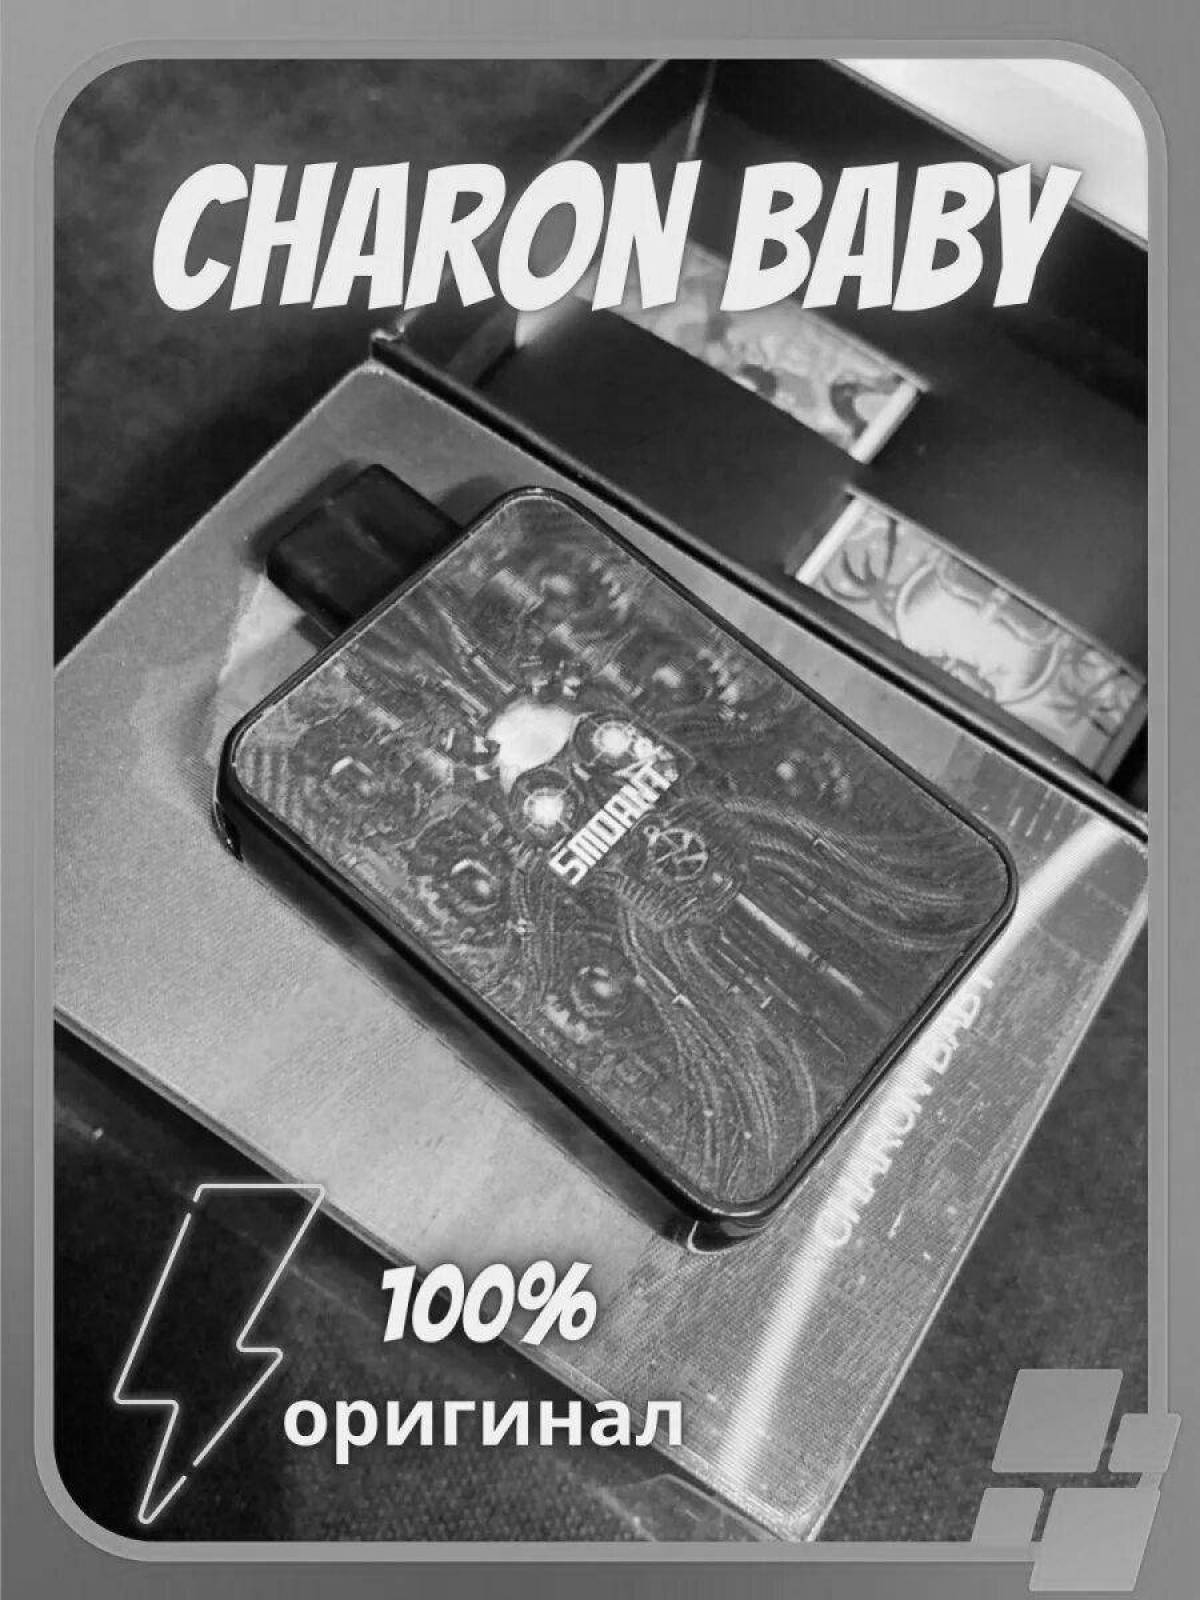 Charon mystery box #9